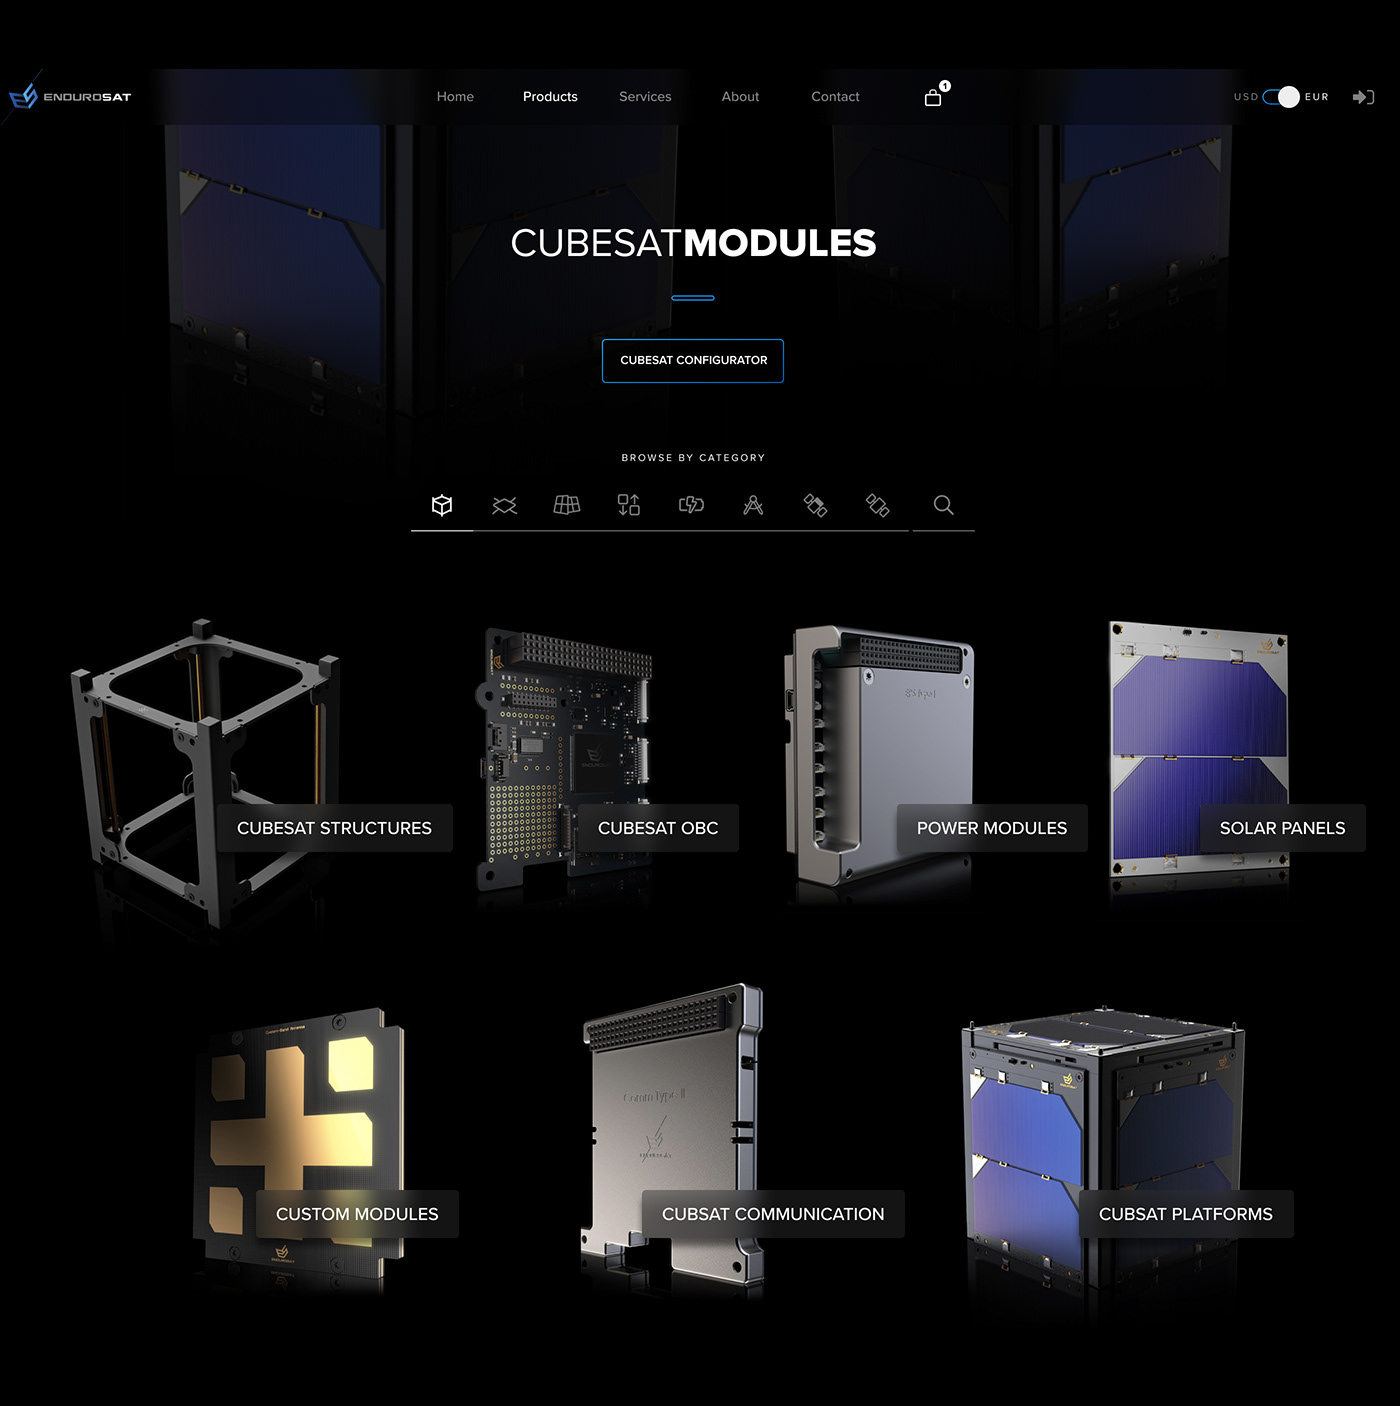 Space  Web Design  UI dark satellite endurosat Technology CubeSat black web site